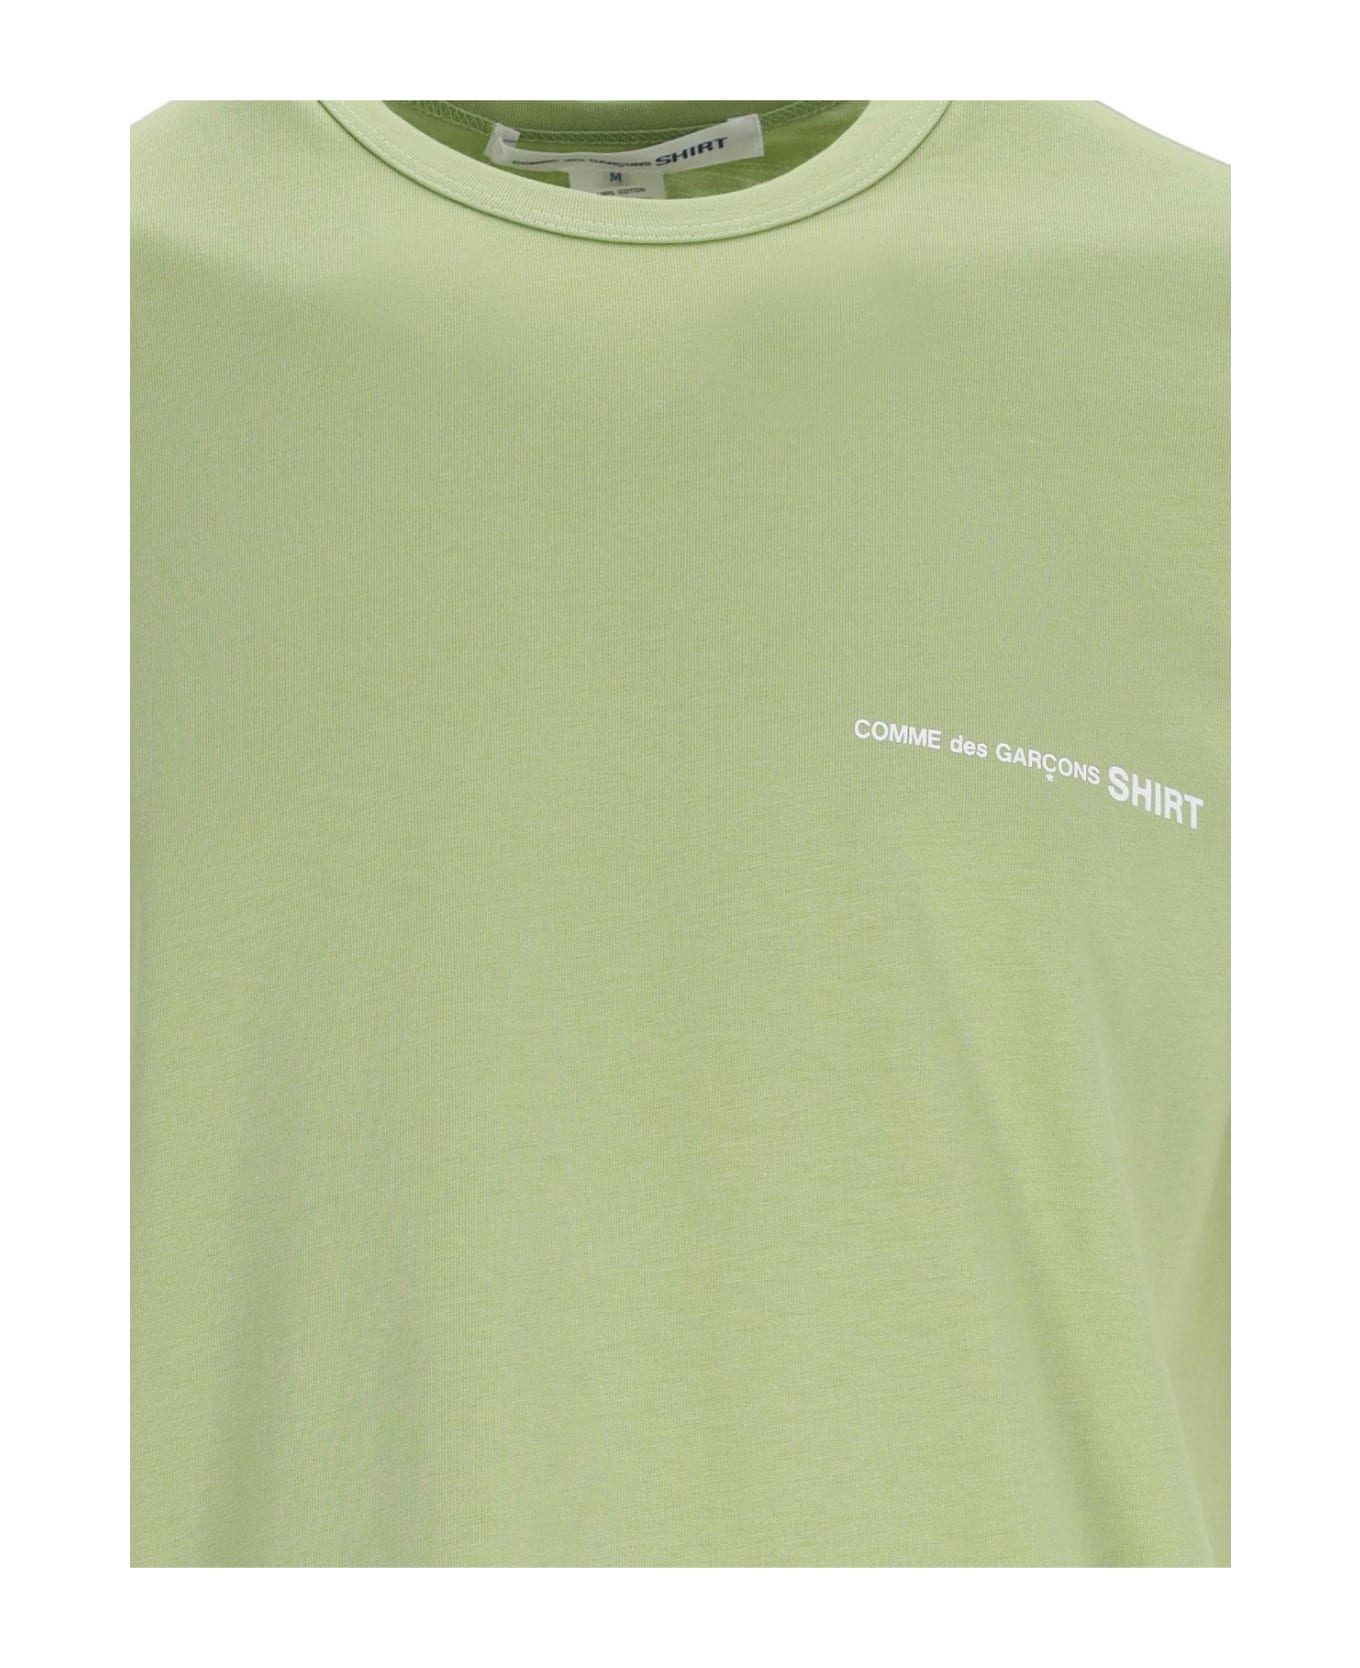 Comme des Garçons Shirt Logo T-shirt - Khaki